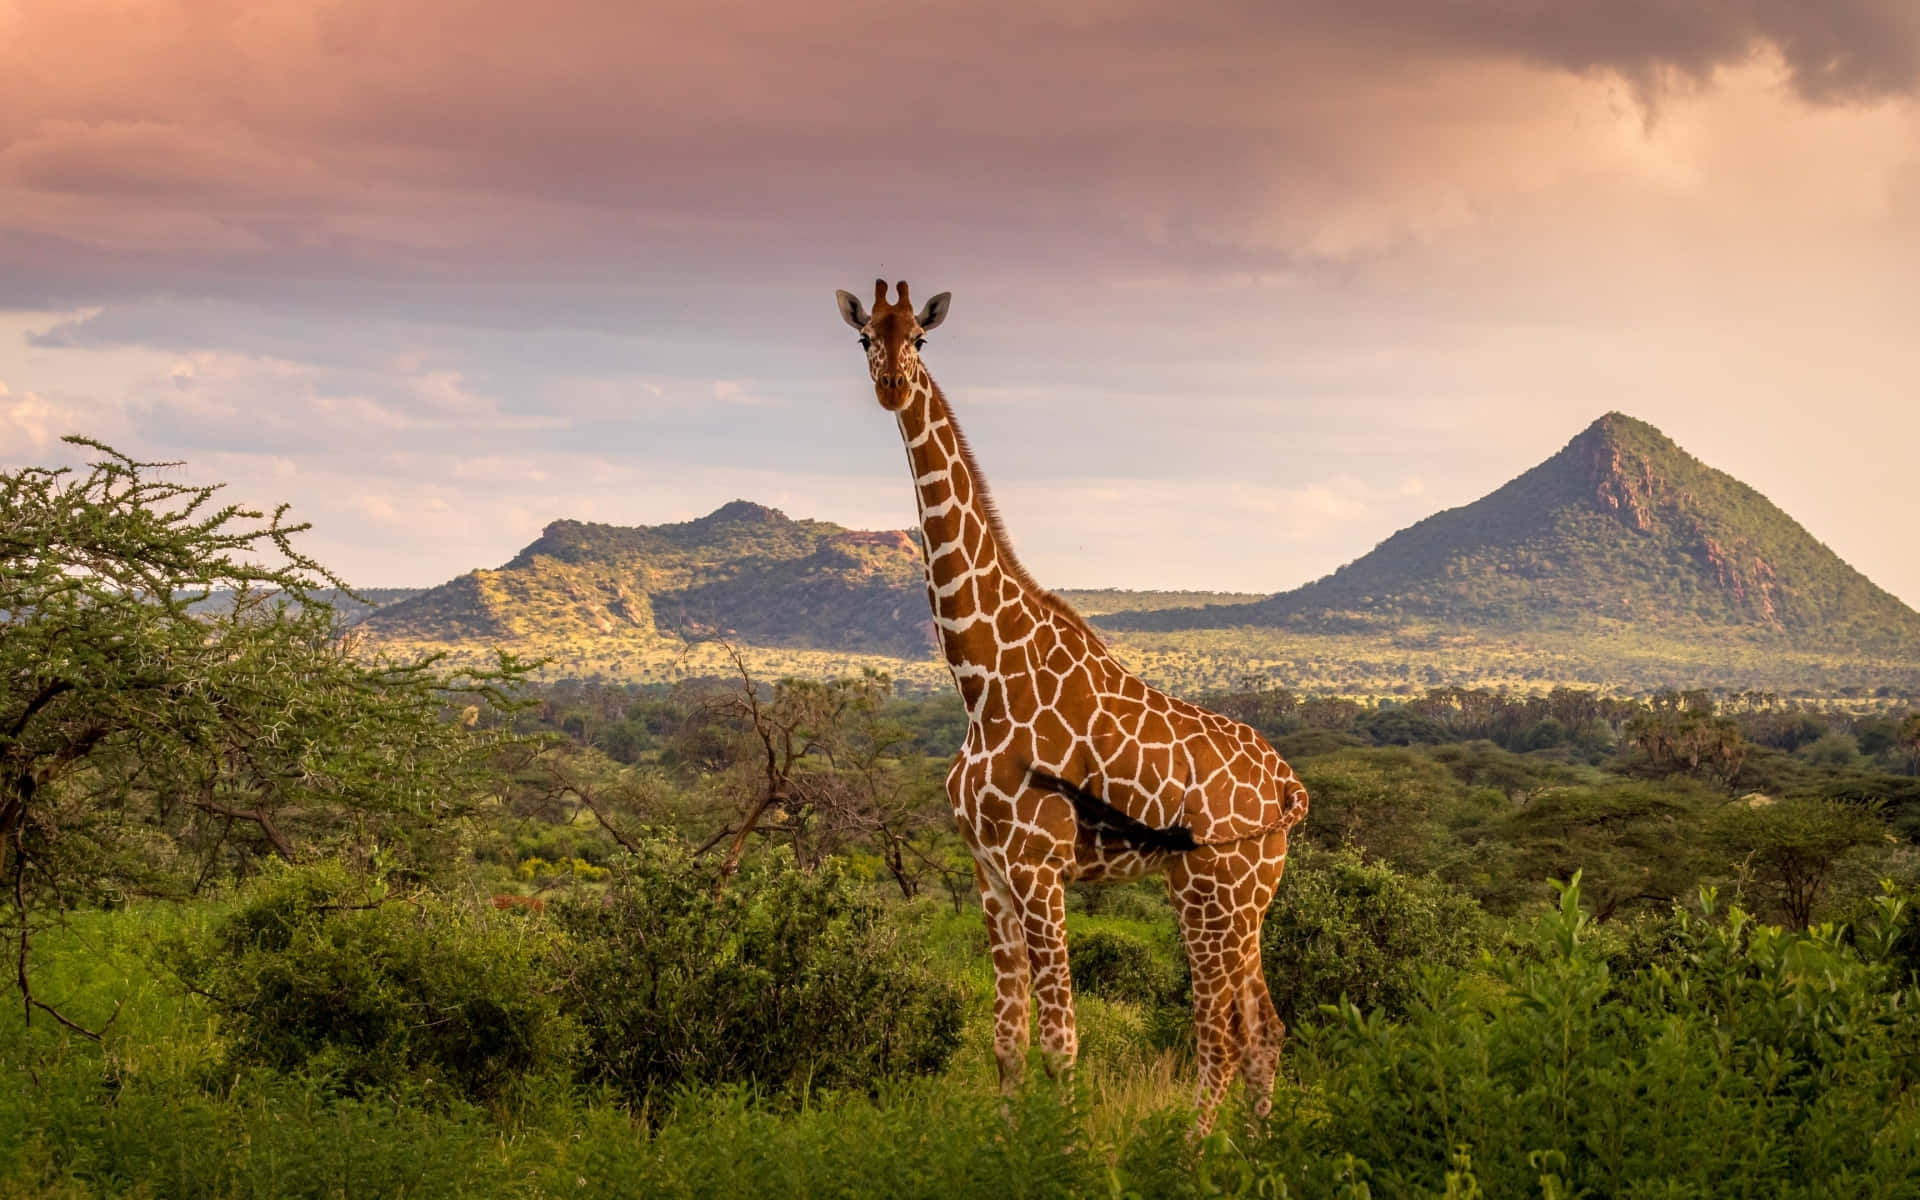 Giraffe In Africa Hd Wallpaper